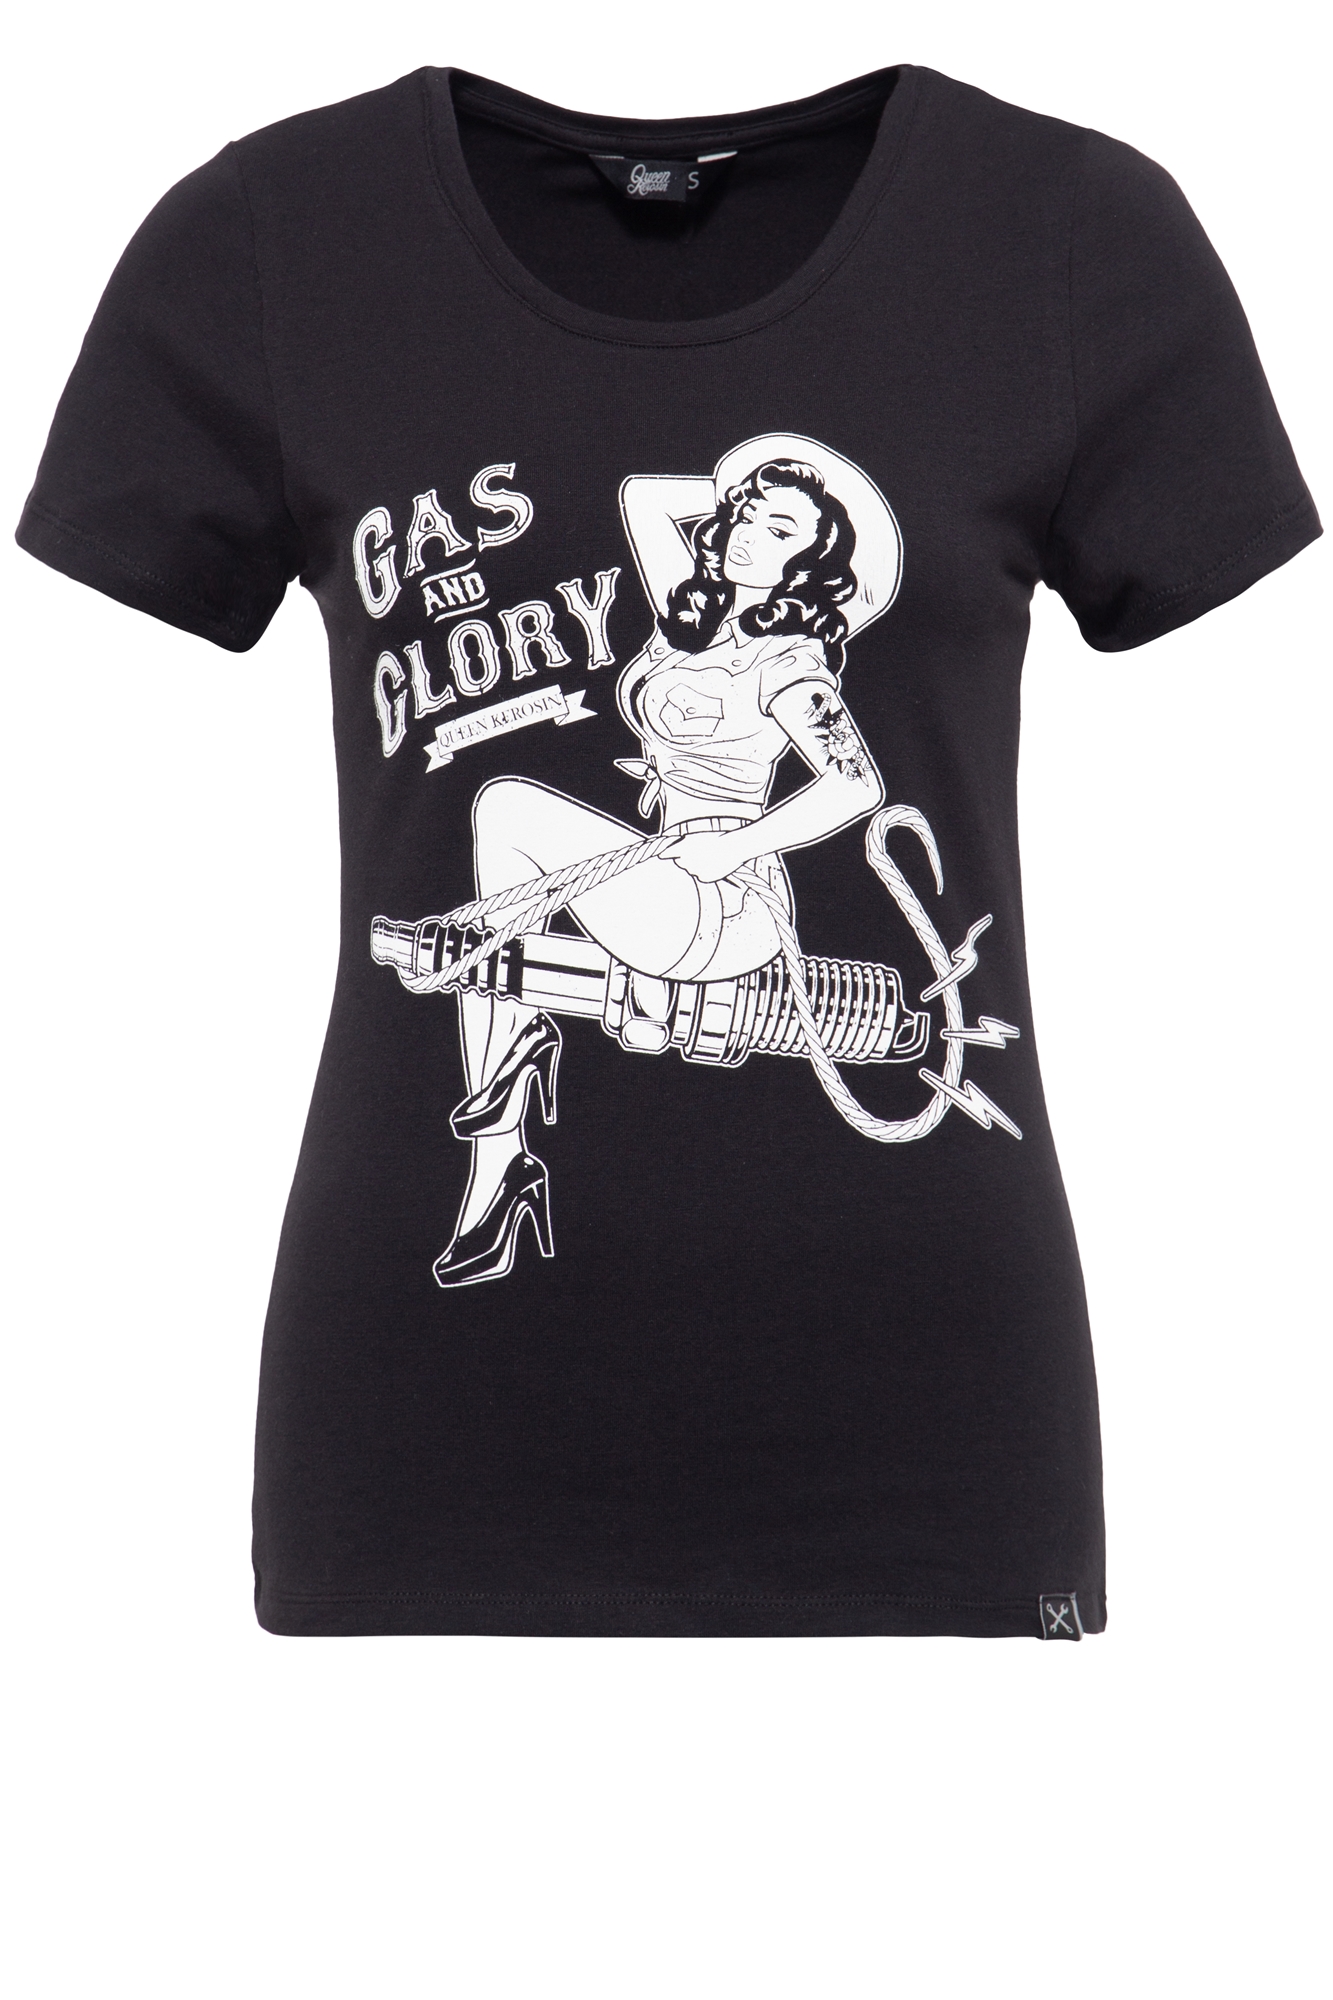 Queen Kerosin T-Shirt - Gas & Glory XL